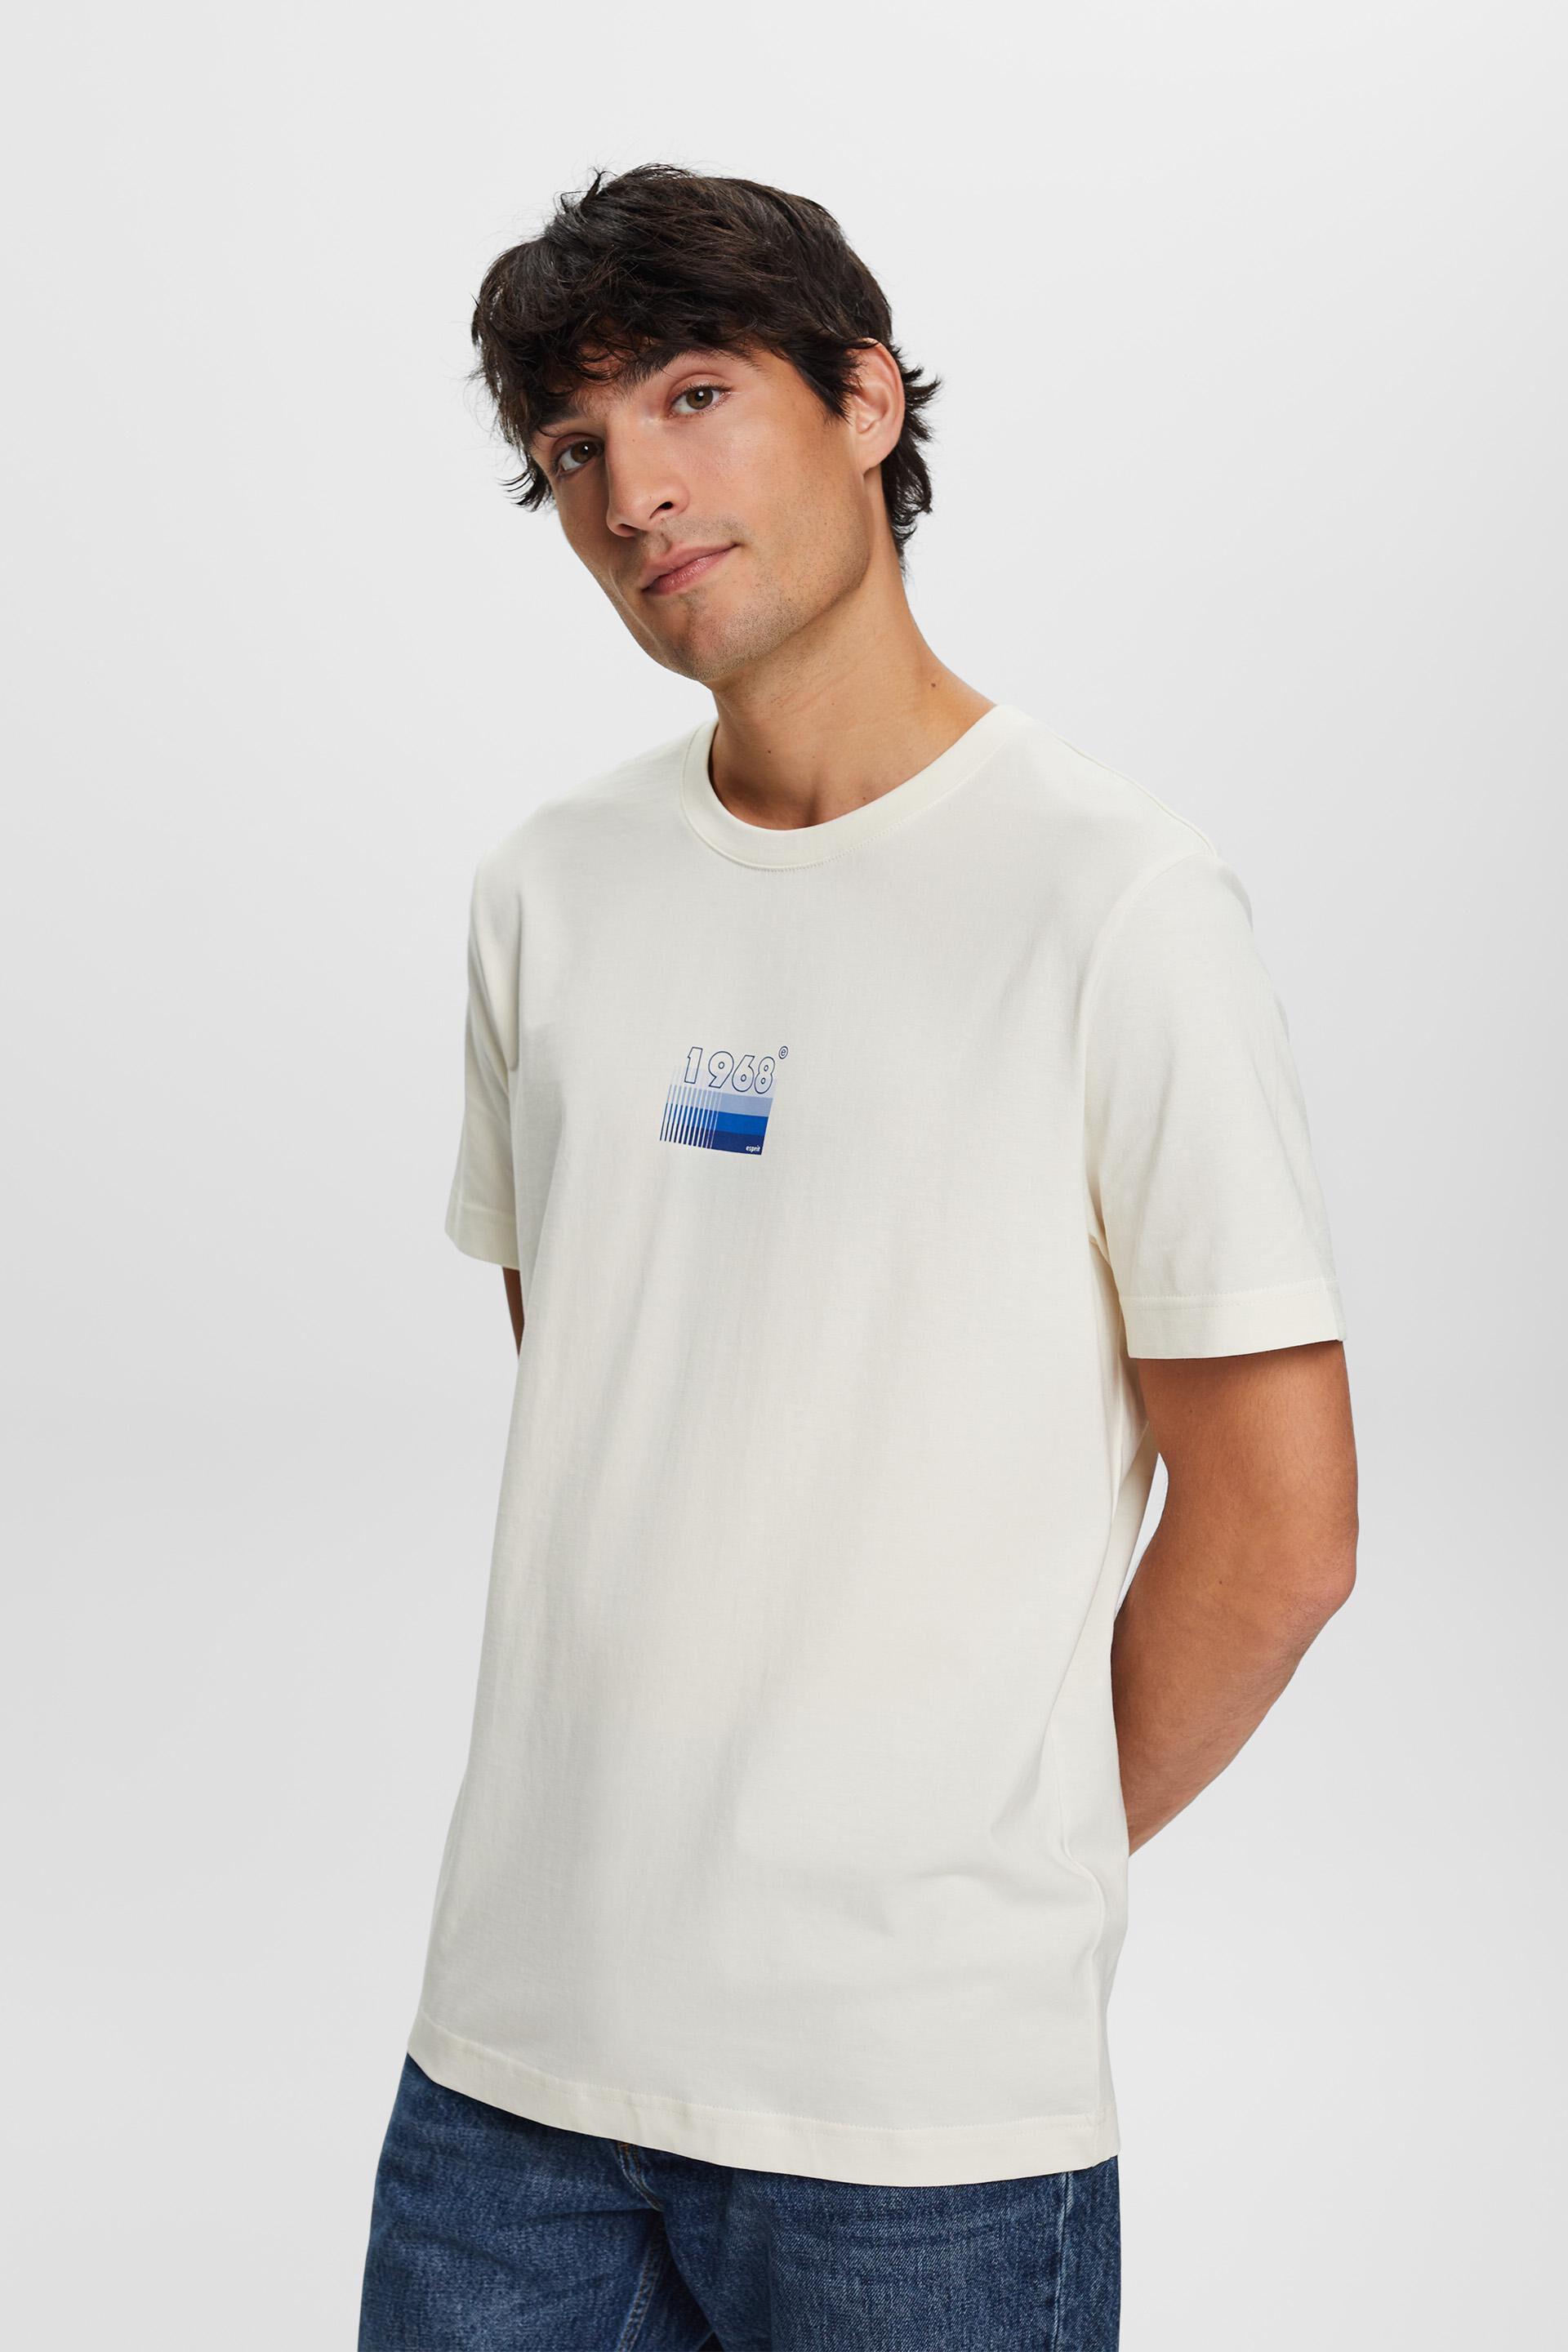 Esprit print, with T-shirt Jersey 100% cotton